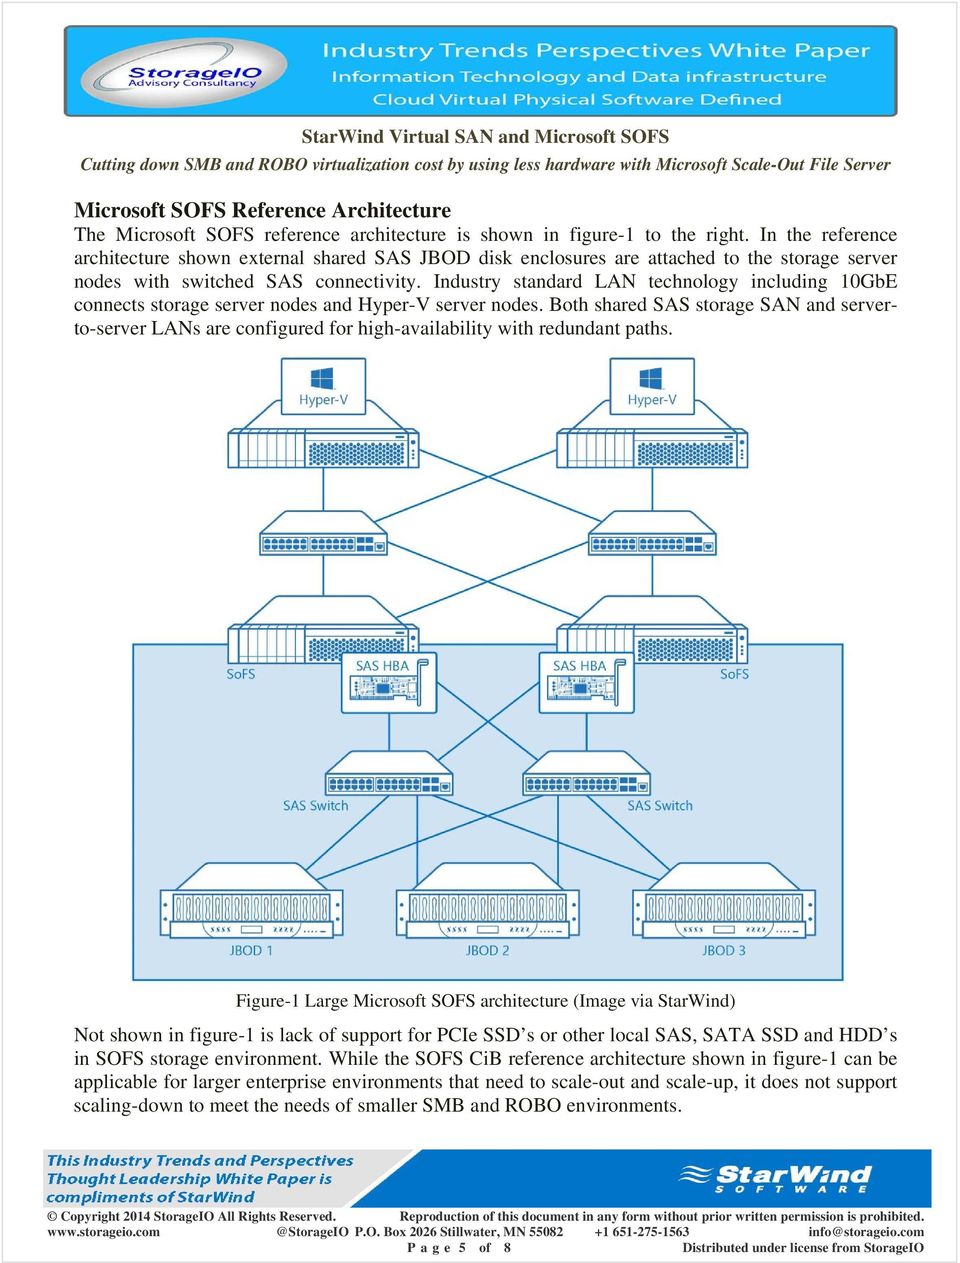 Industry standard LAN technology including 10GbE connects storage server nodes and Hyper-V server nodes.